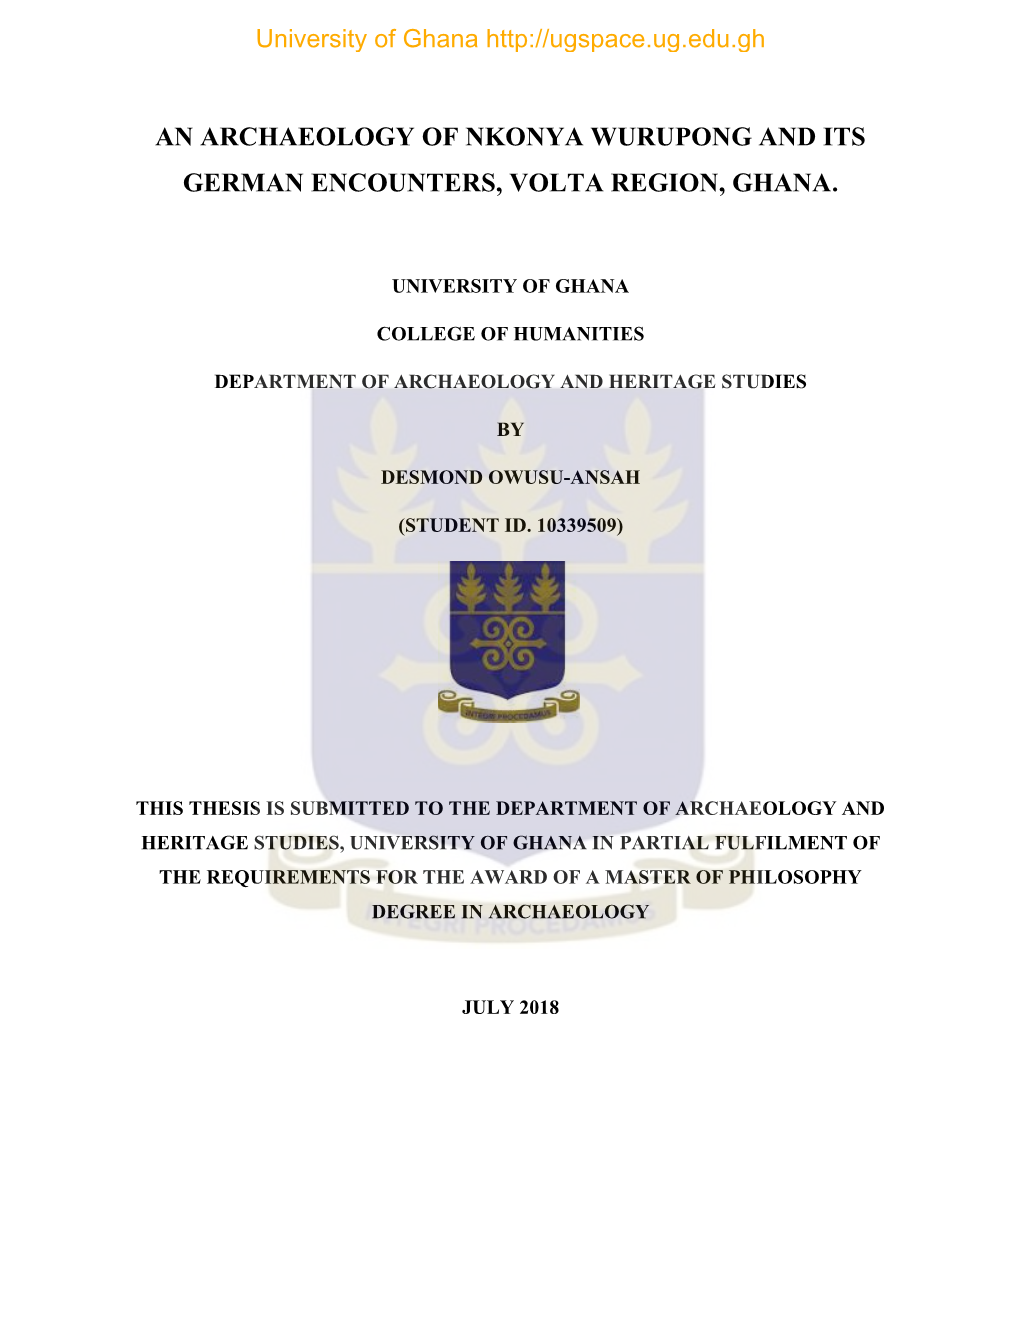 An Archaeology of Nkonya Wurupong and Its German Encounters, Volta Region, Ghana